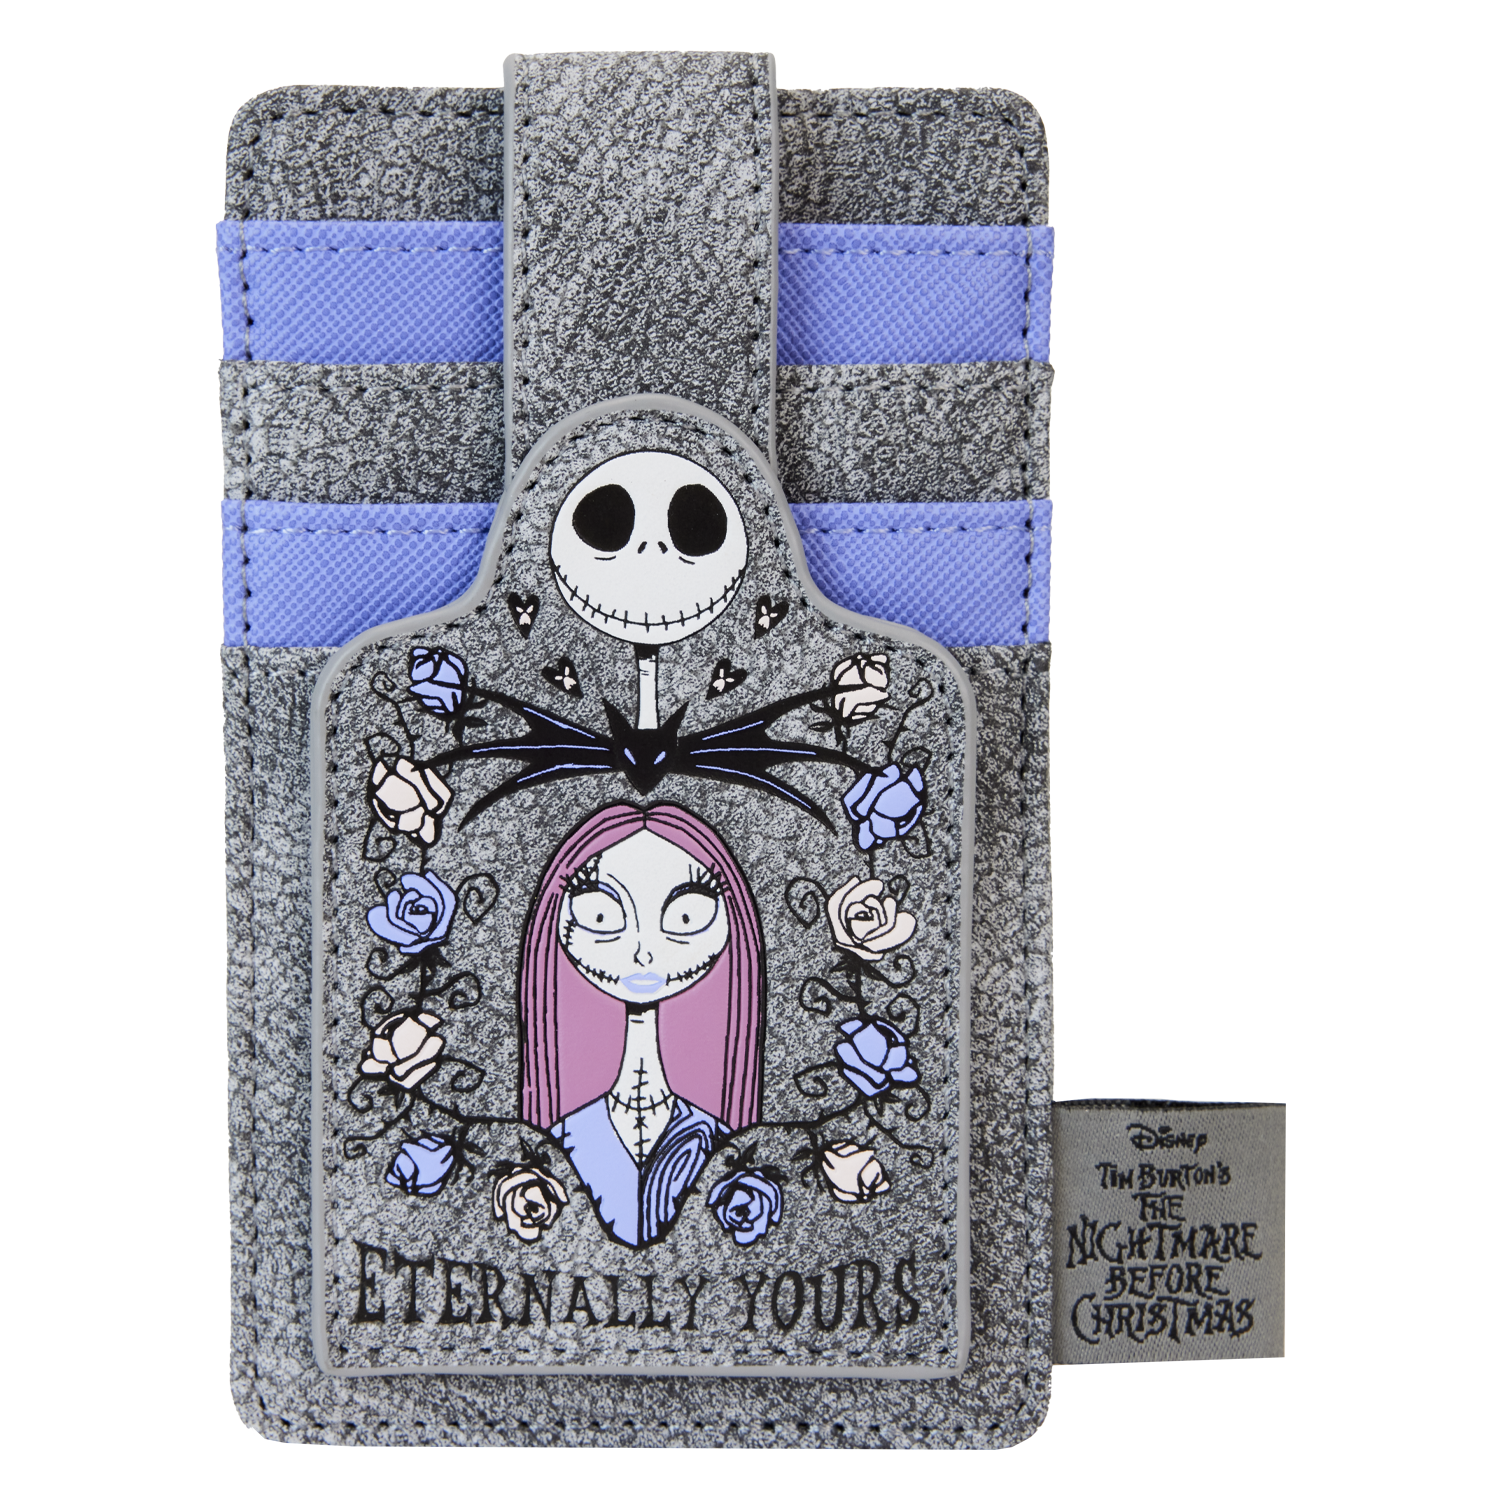 Nightmare Before Christmas Loungefly Cardholder Lanyard - Disney Pins Blog